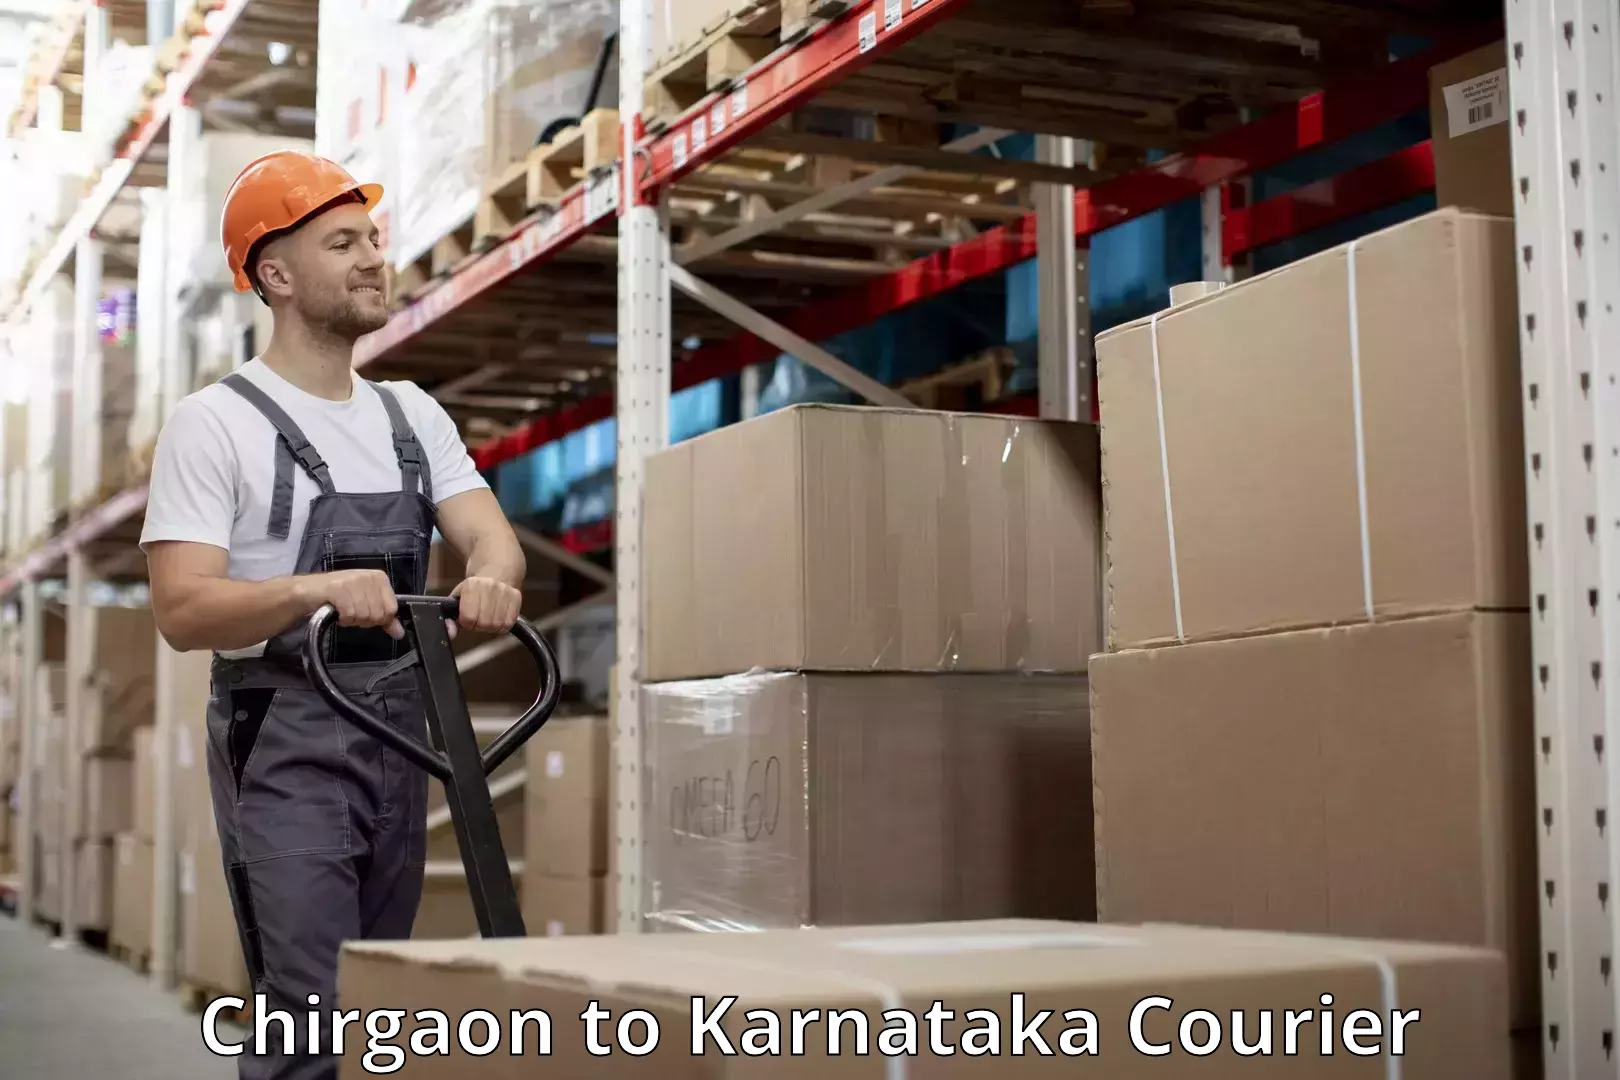 Baggage transport network Chirgaon to Karnataka